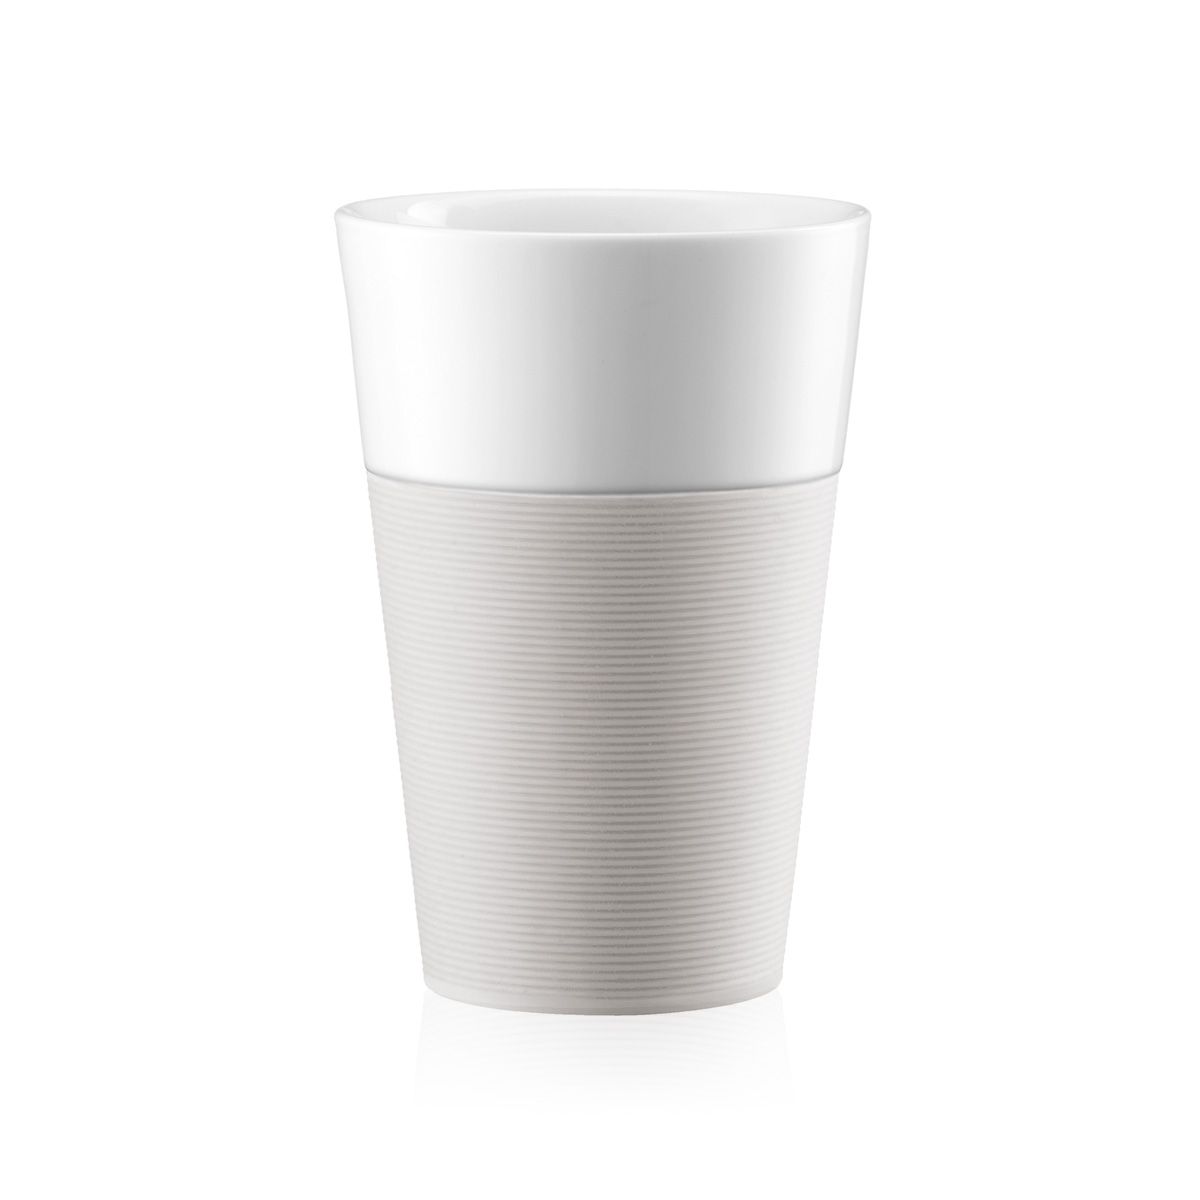 Bodum Bistro Mug With Silicone Strap Cream 0.6 L, 2 Pcs.